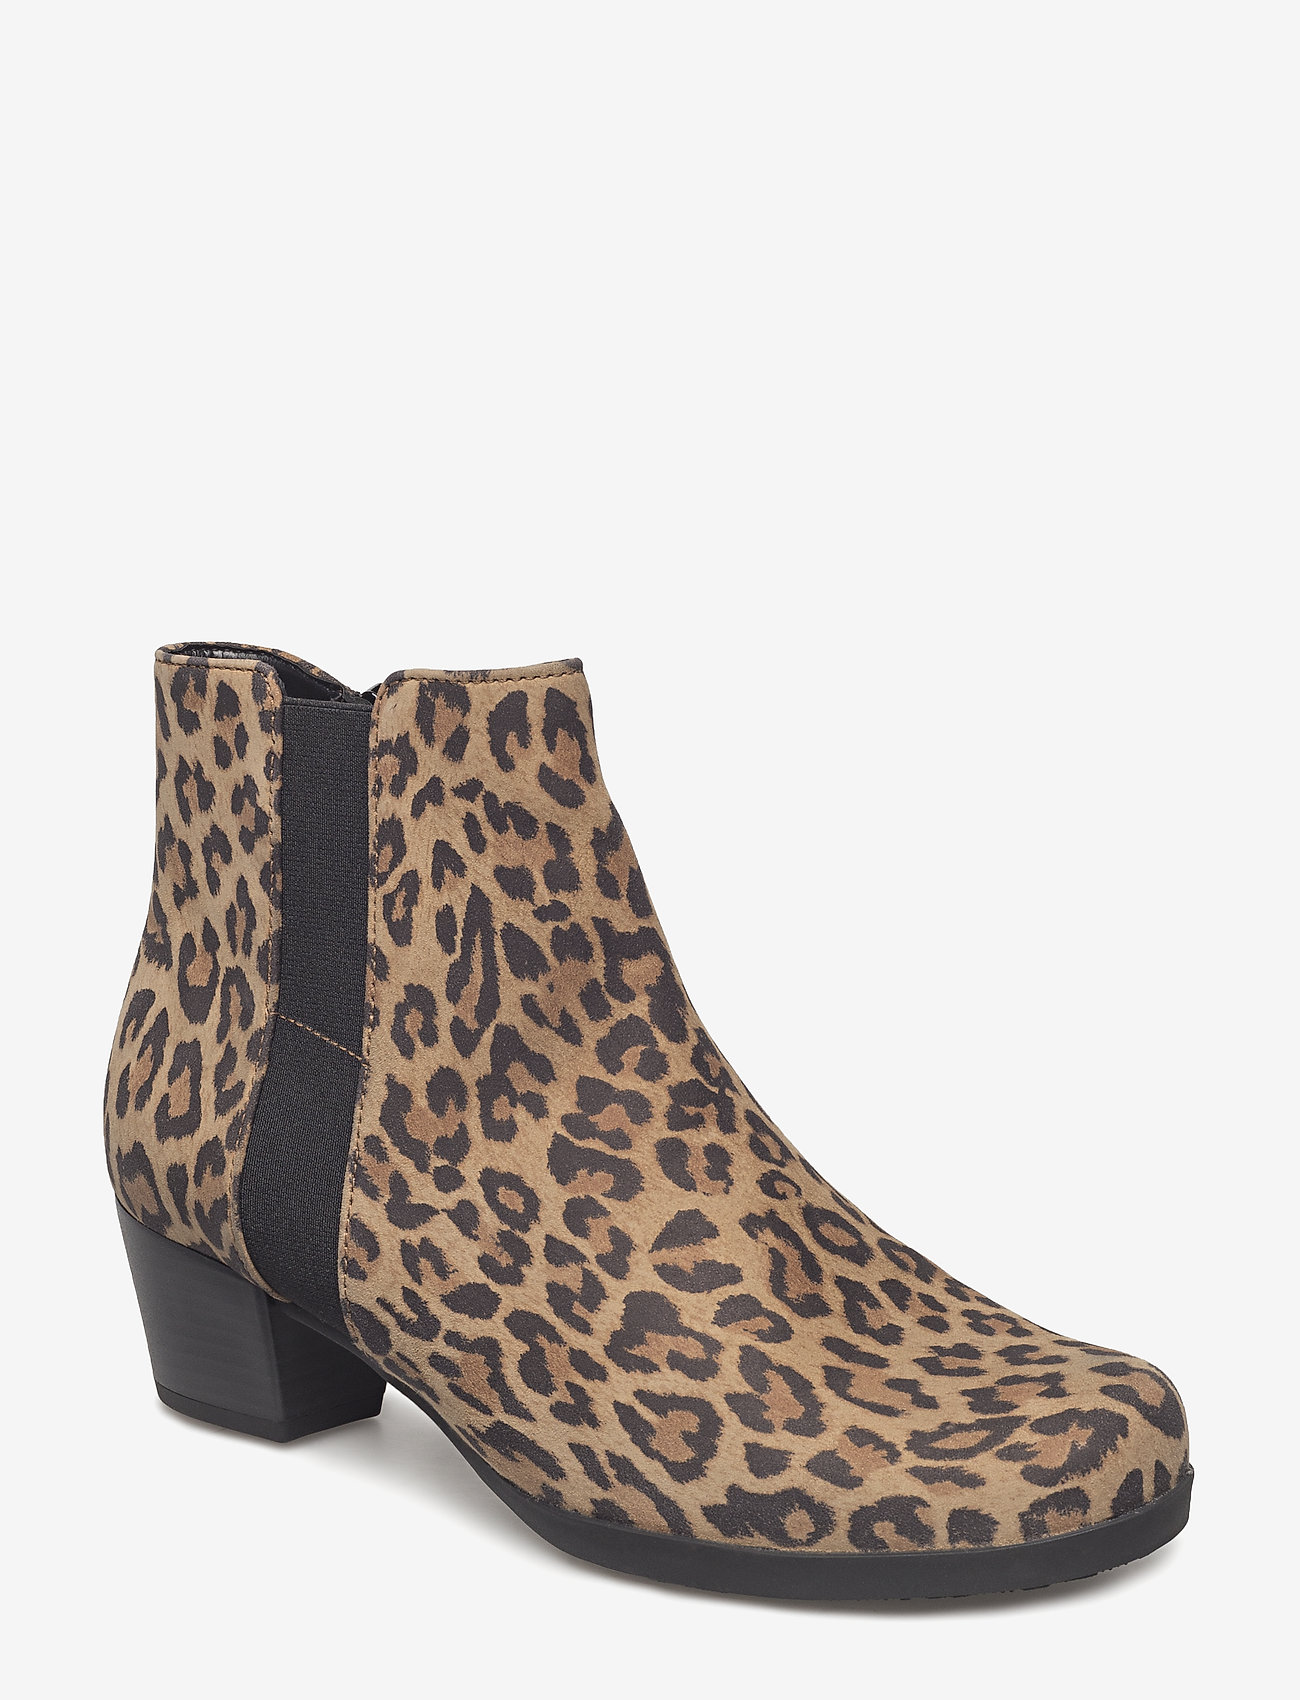 gabor leopard print boots